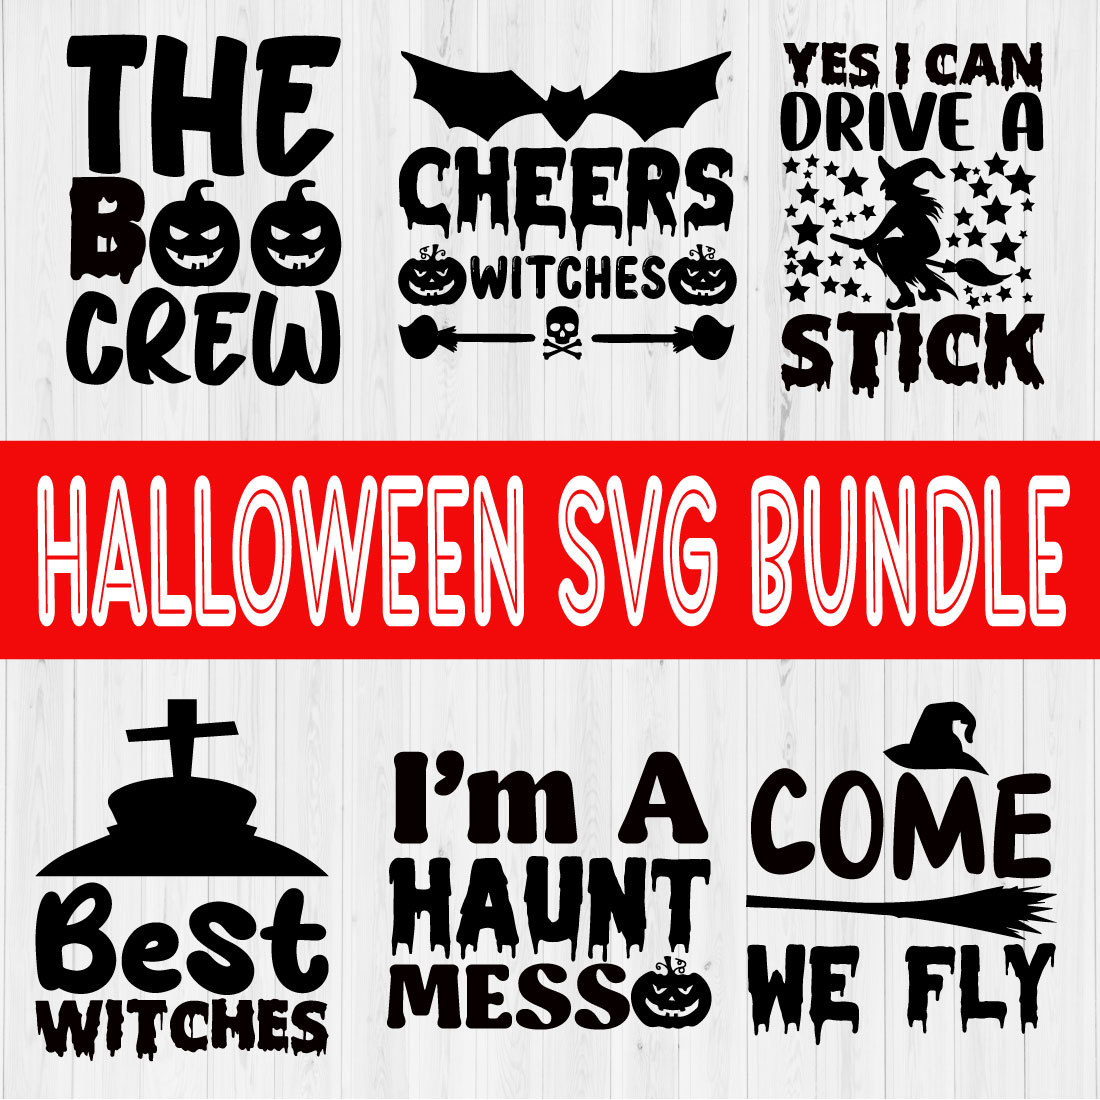 Halloween Svg Bundle Vol9 cover image.